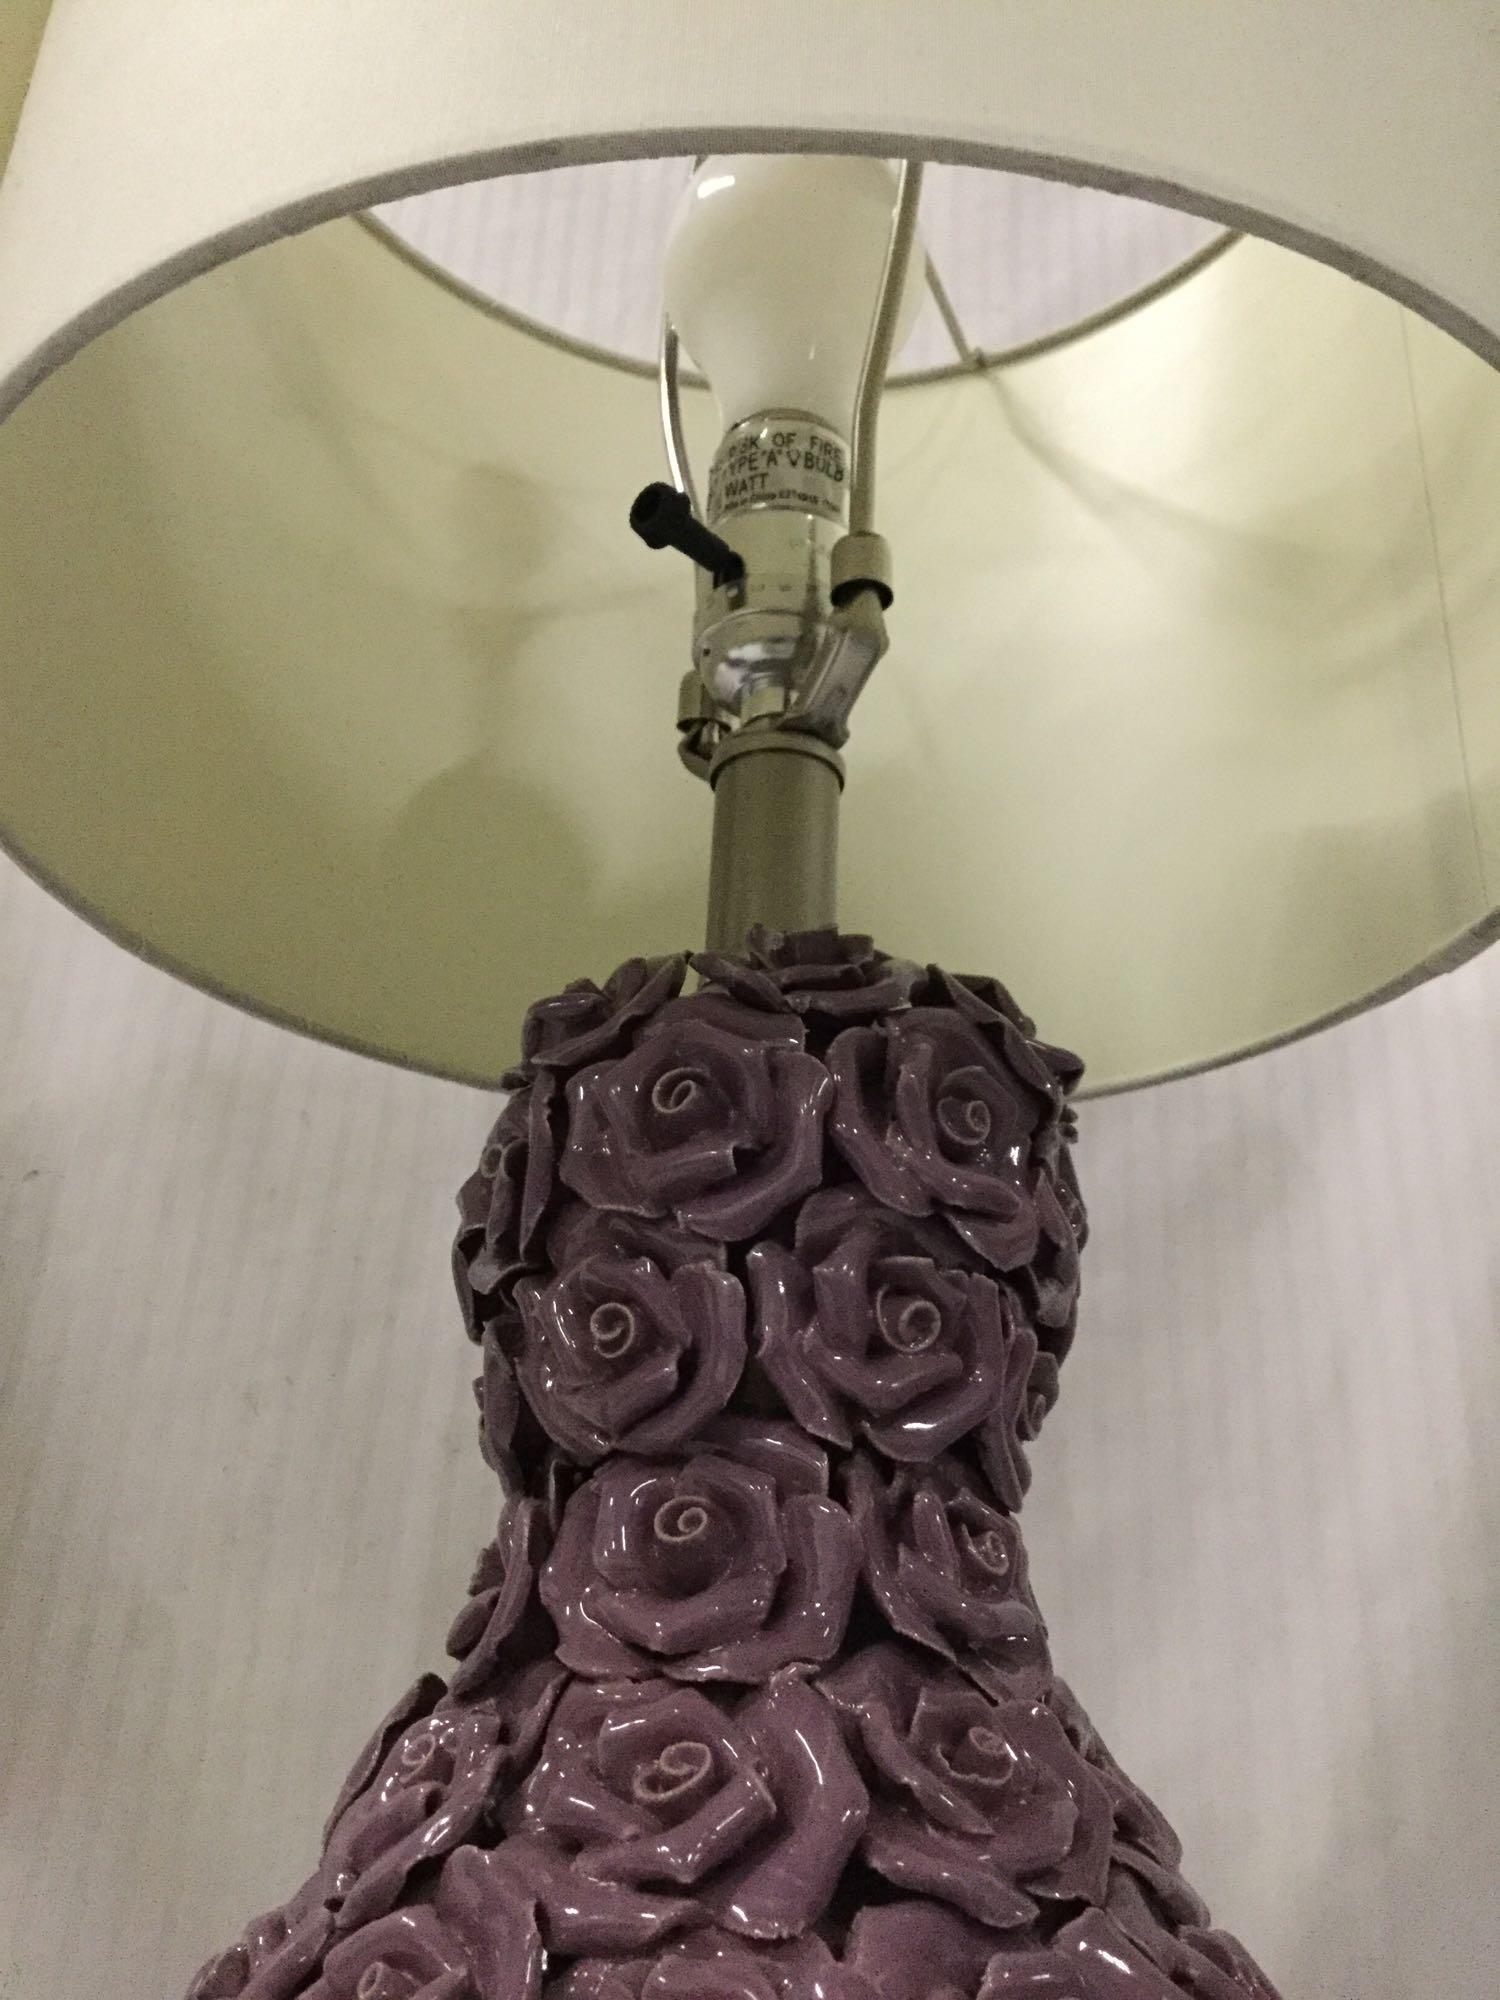 Pair of purple ceramic rose lamps.